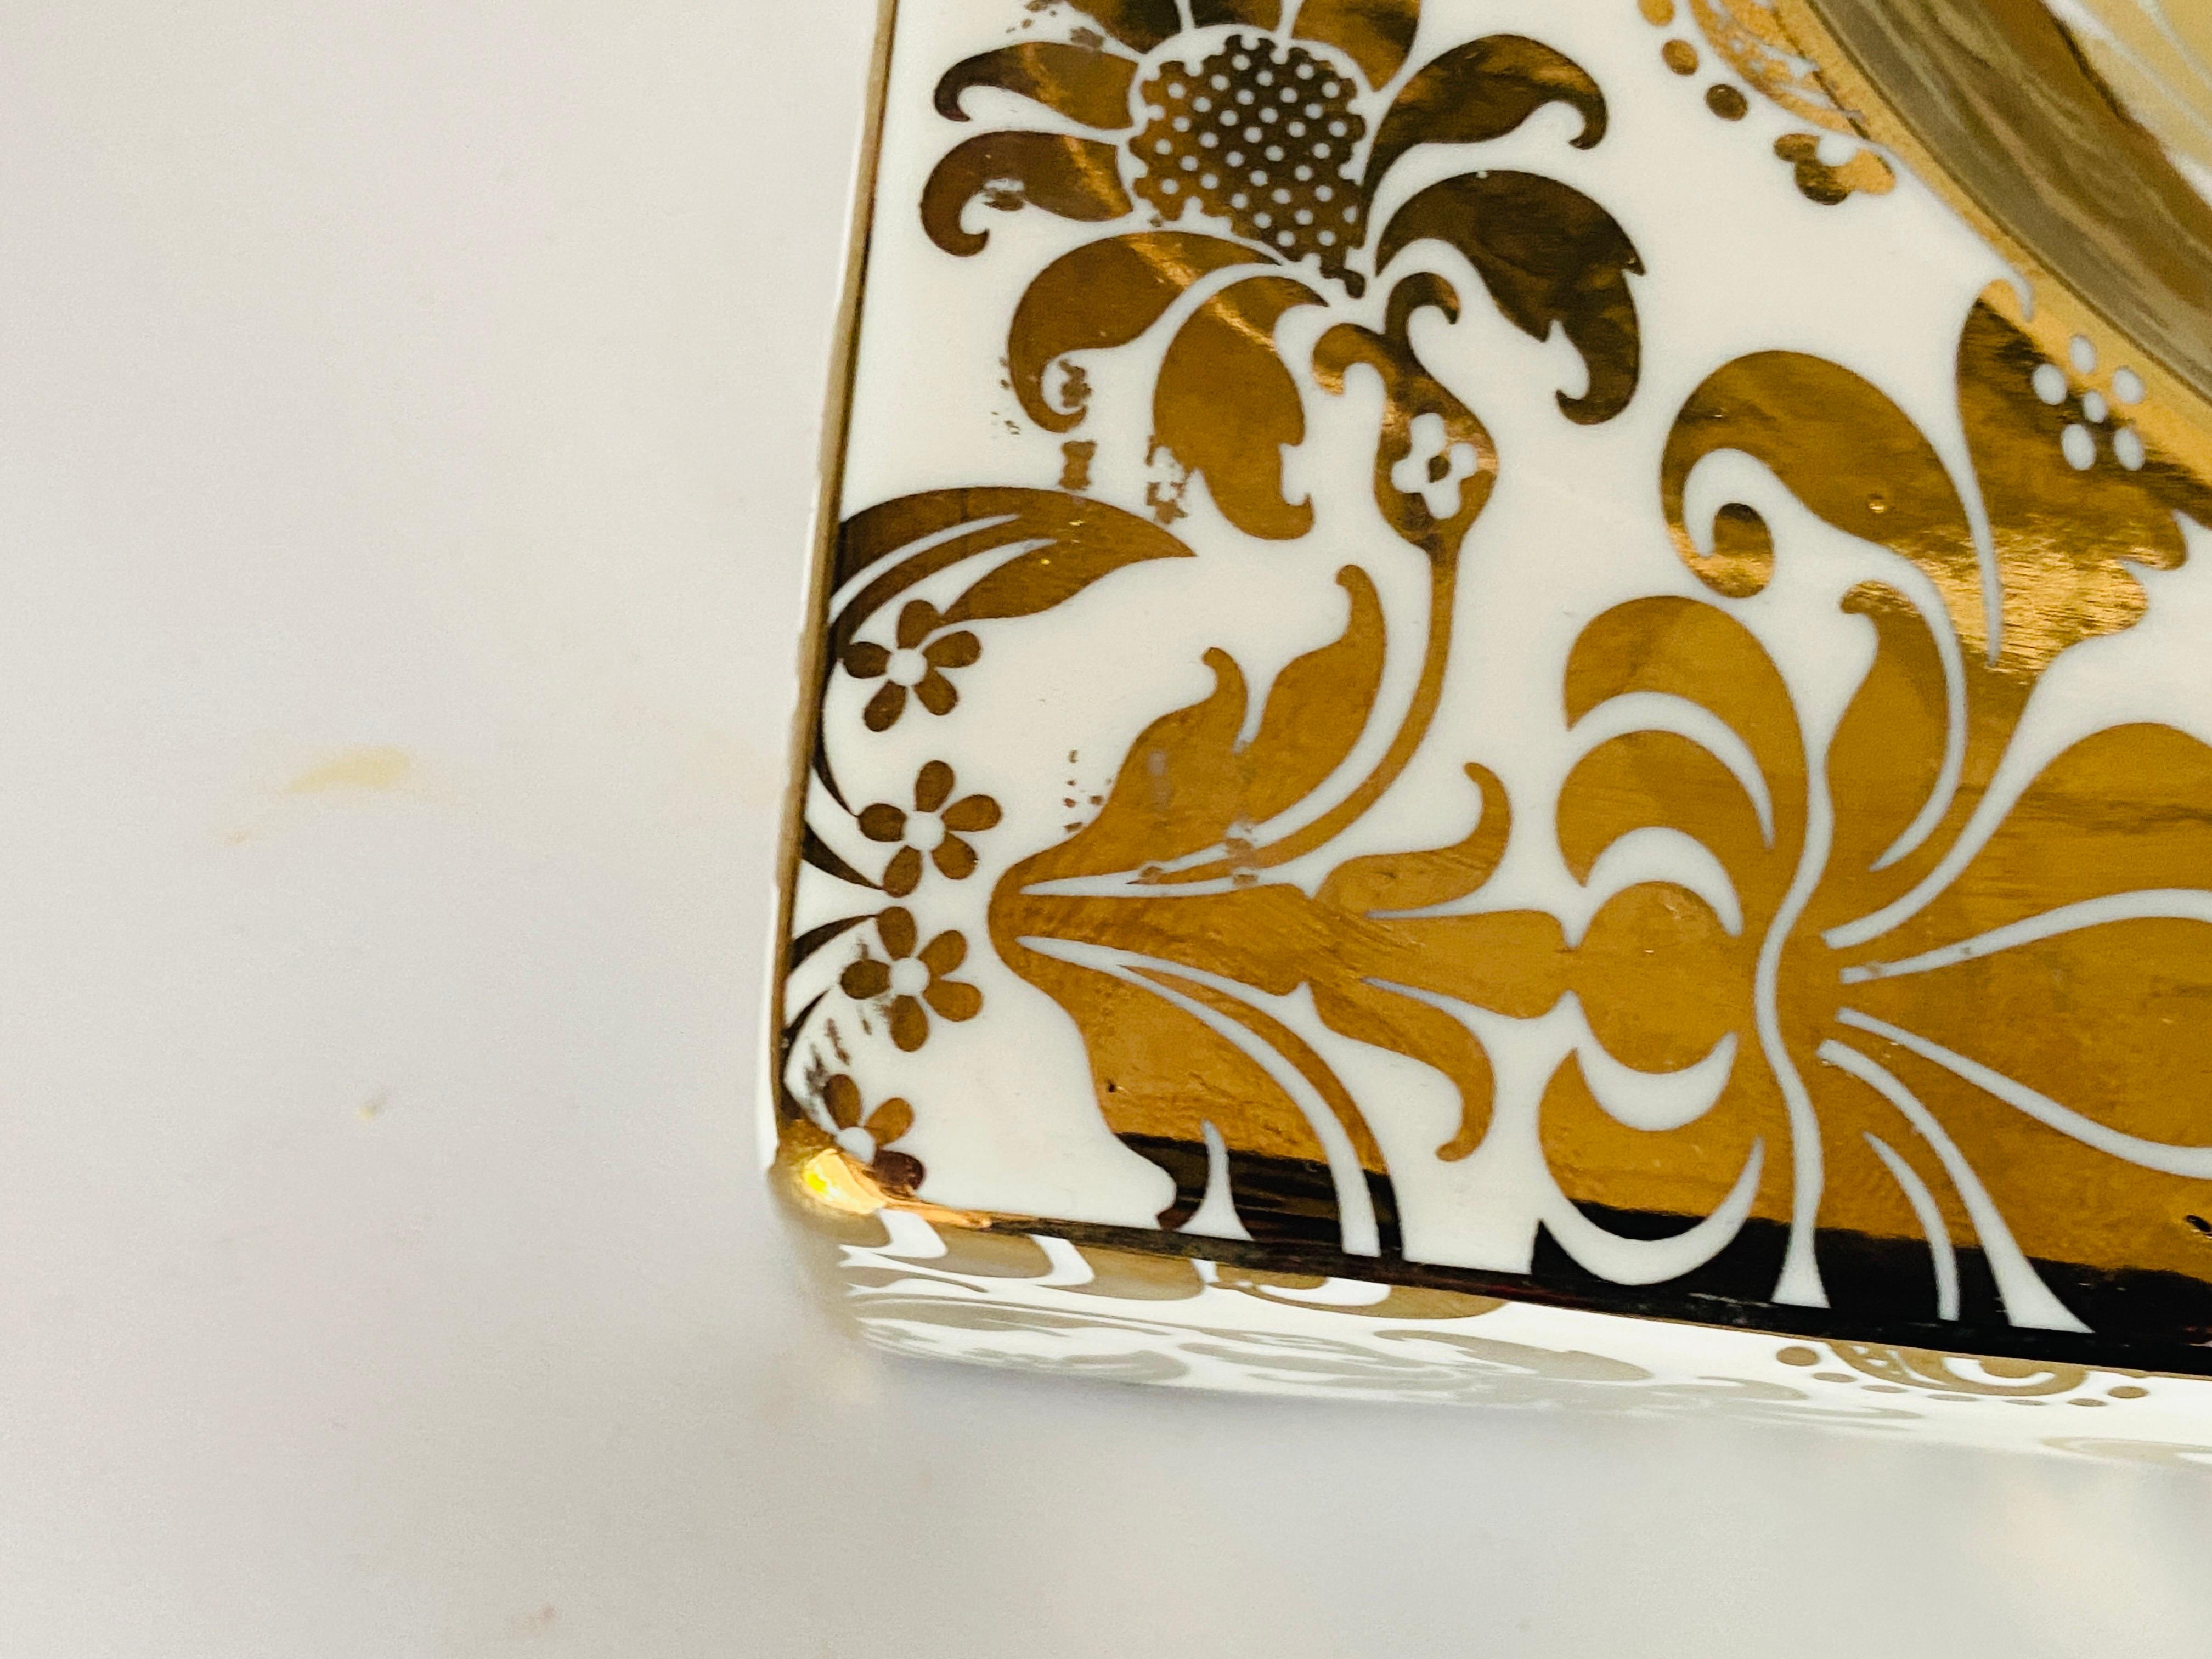 Baroque ashtray or Vide Poche in ceramic
Signed KARE design.
 Kare design Germany 20th Century, gold and white color.